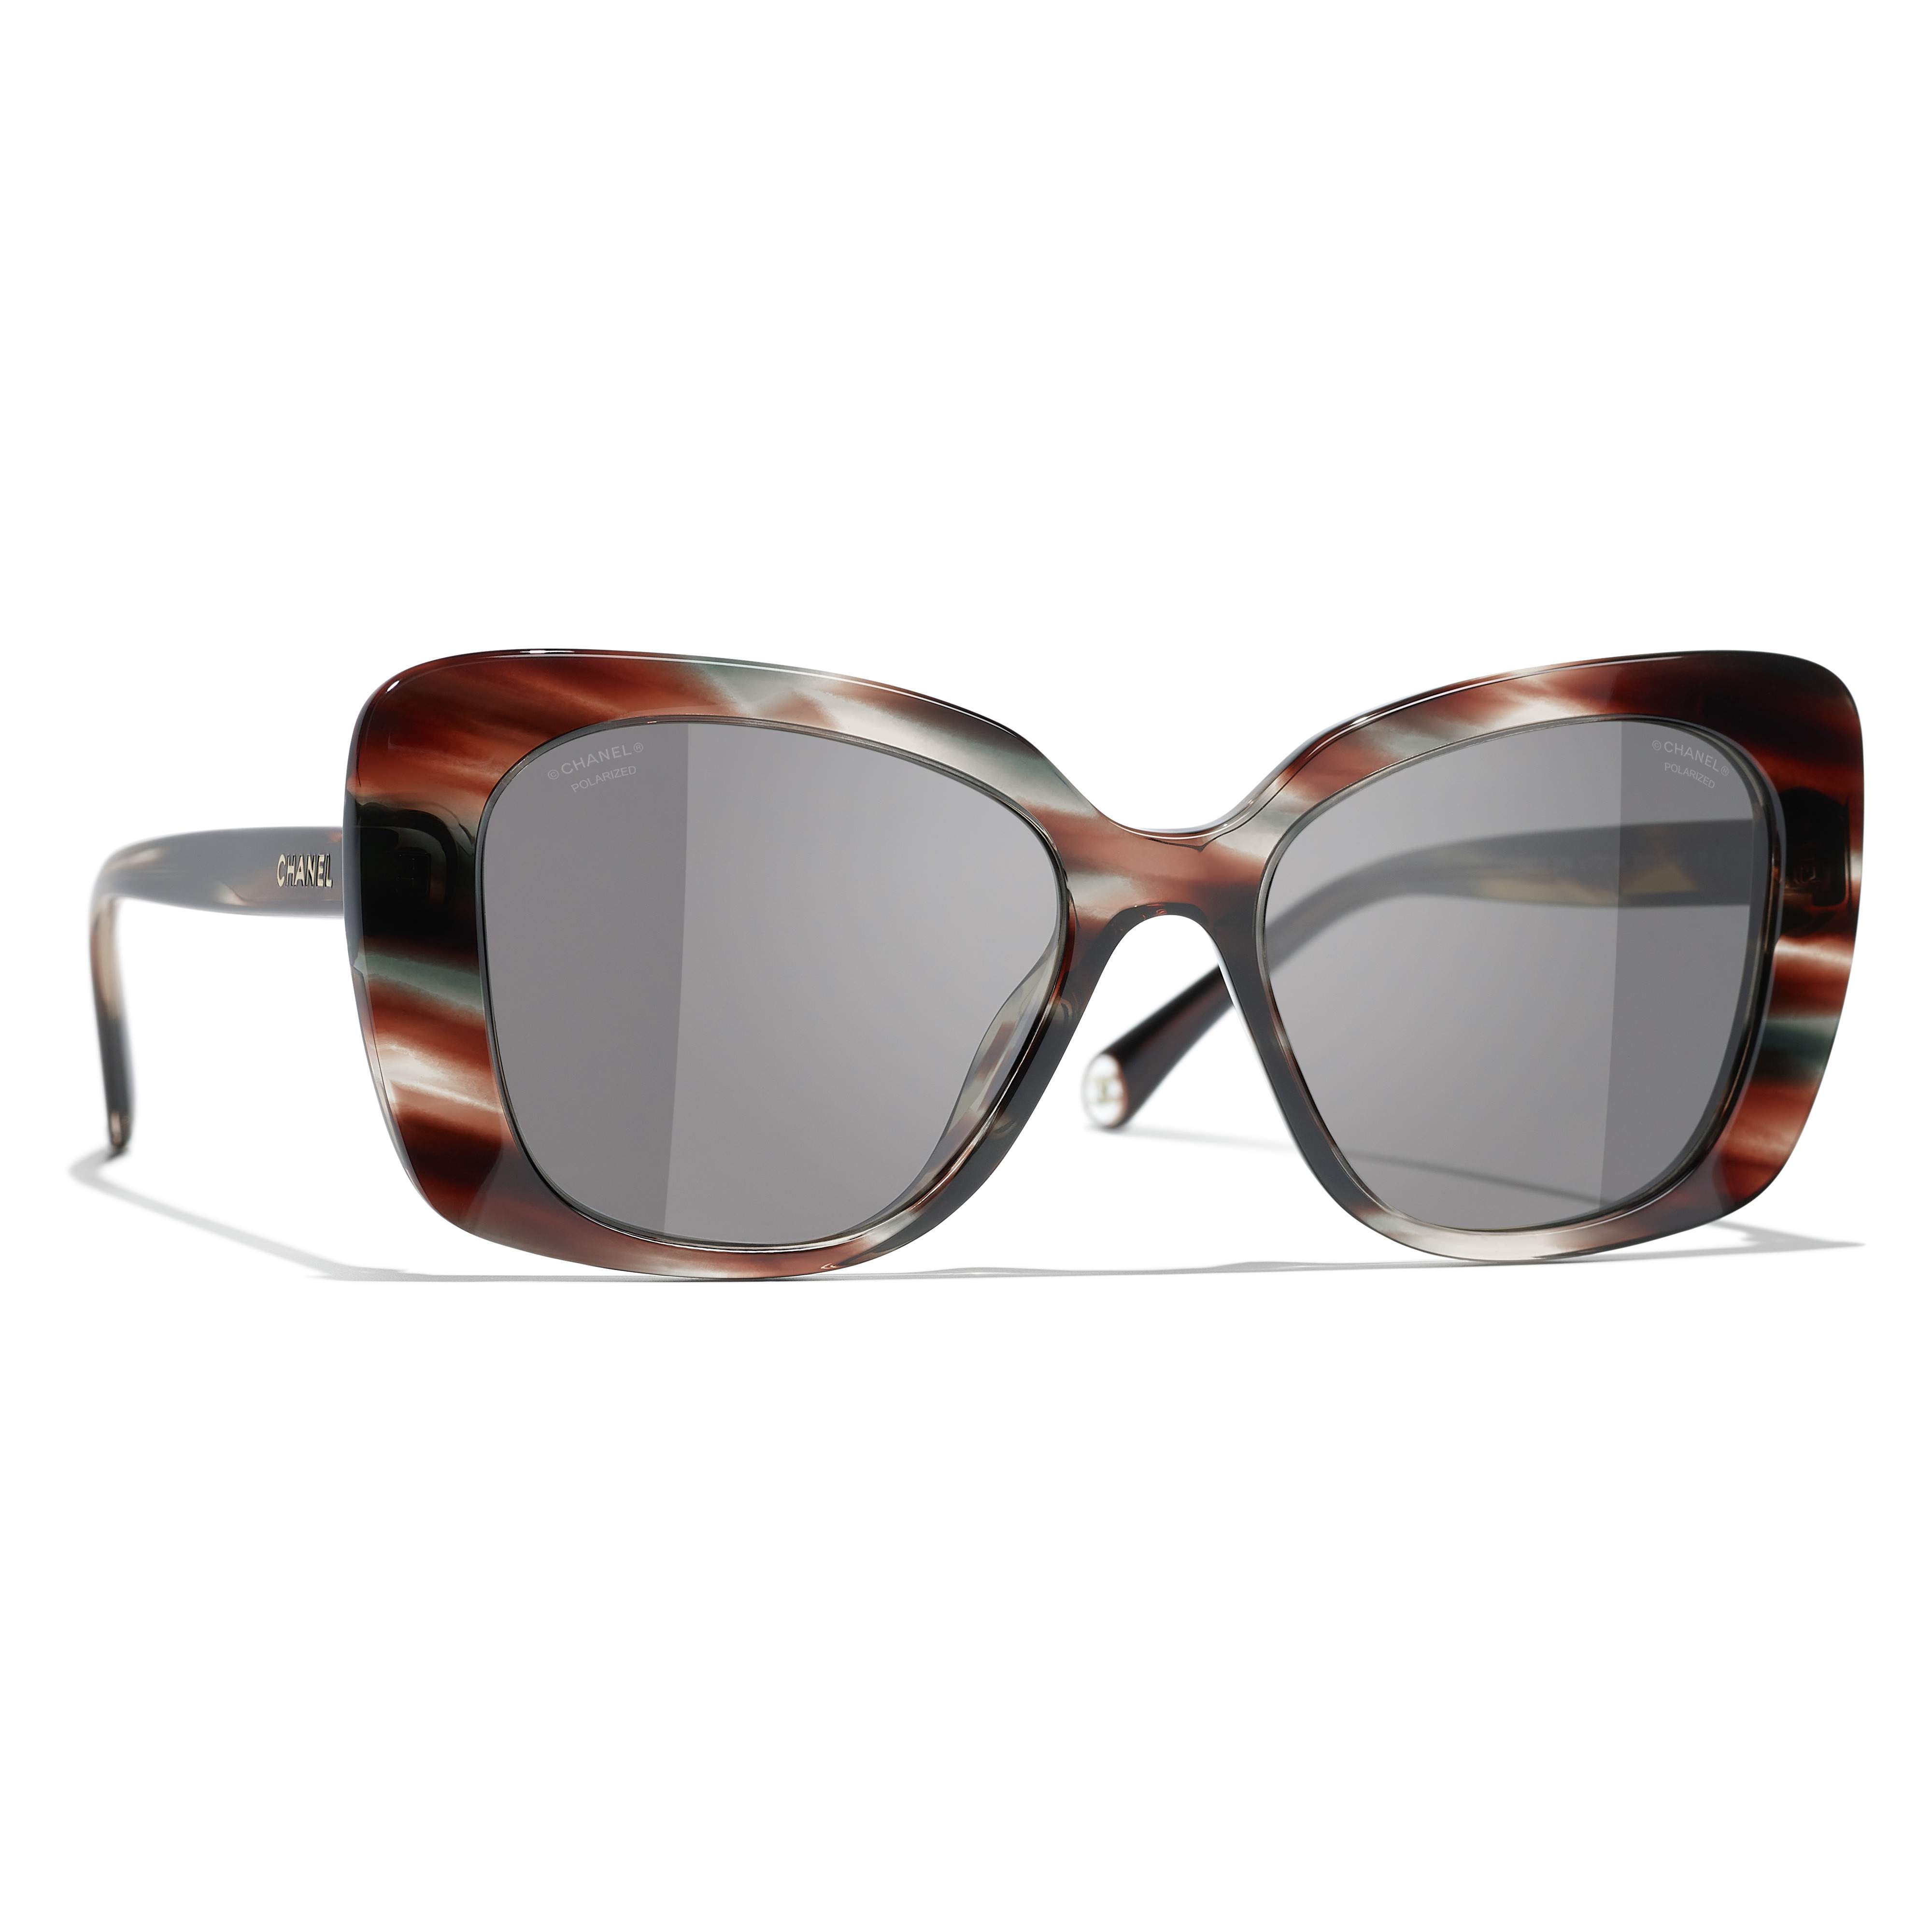 Sunglasses CHANEL CH5504 1727/48 53-17 Tortoise in stock